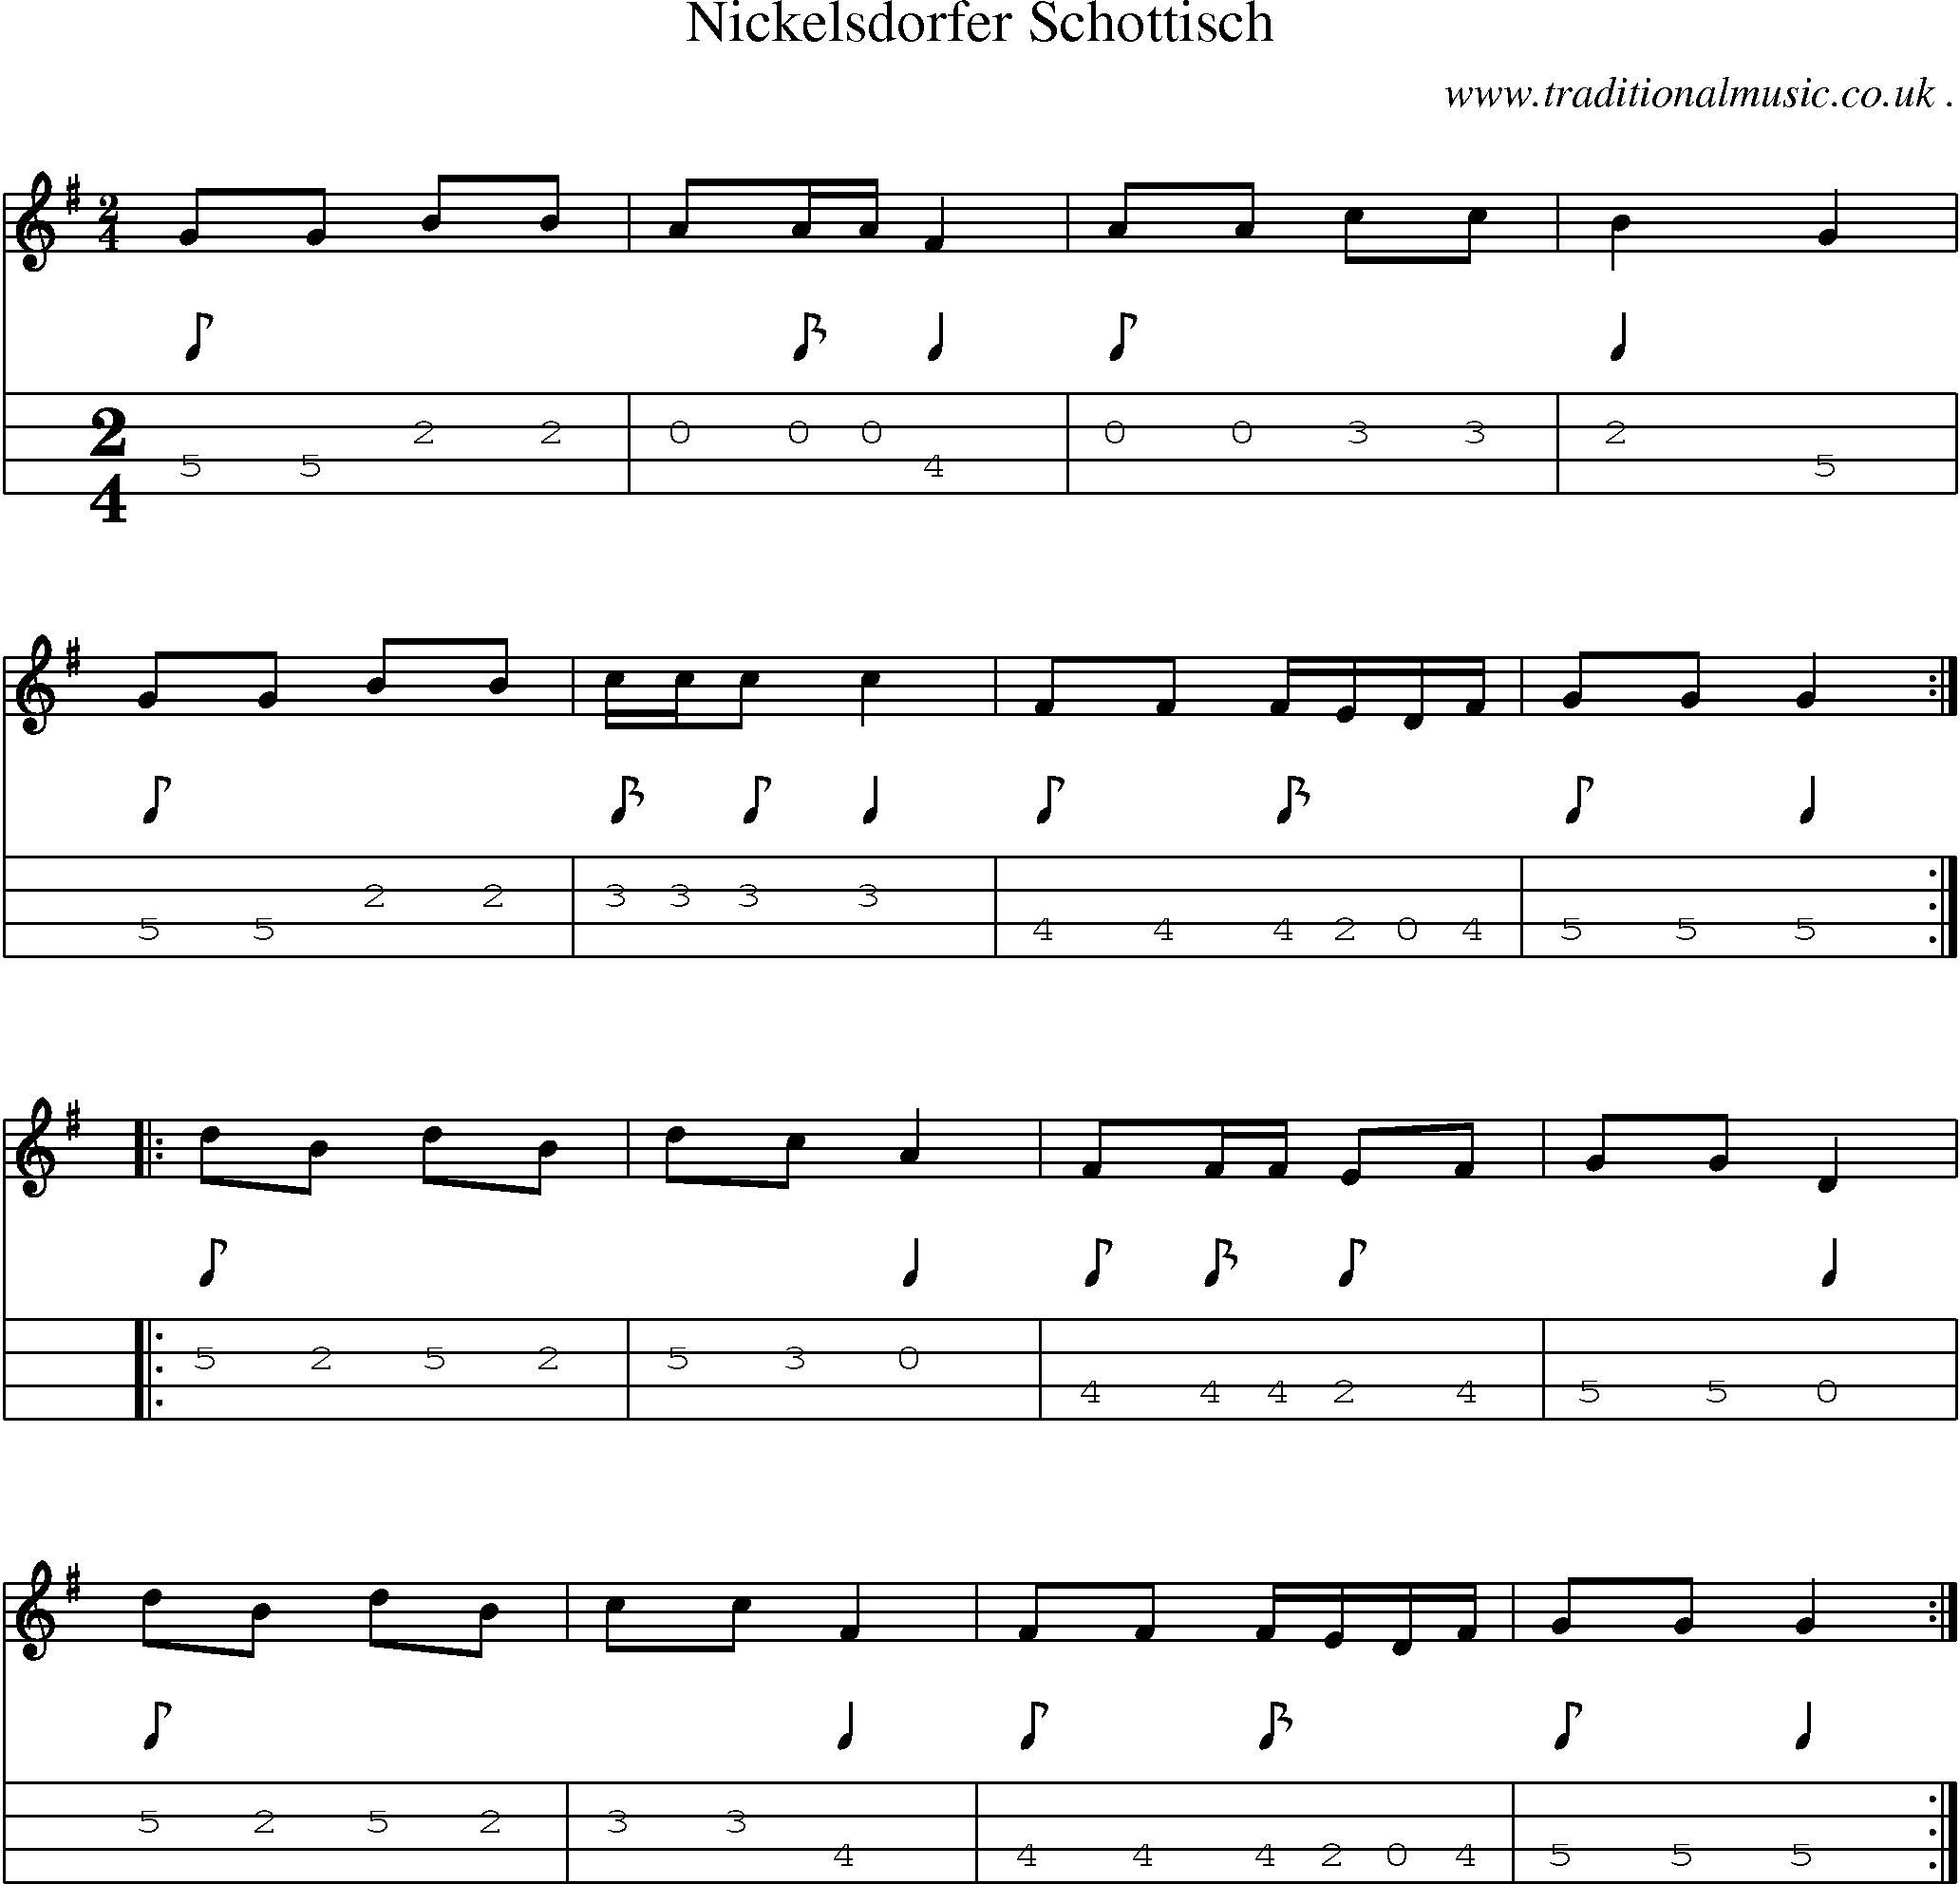 Sheet-Music and Mandolin Tabs for Nickelsdorfer Schottisch